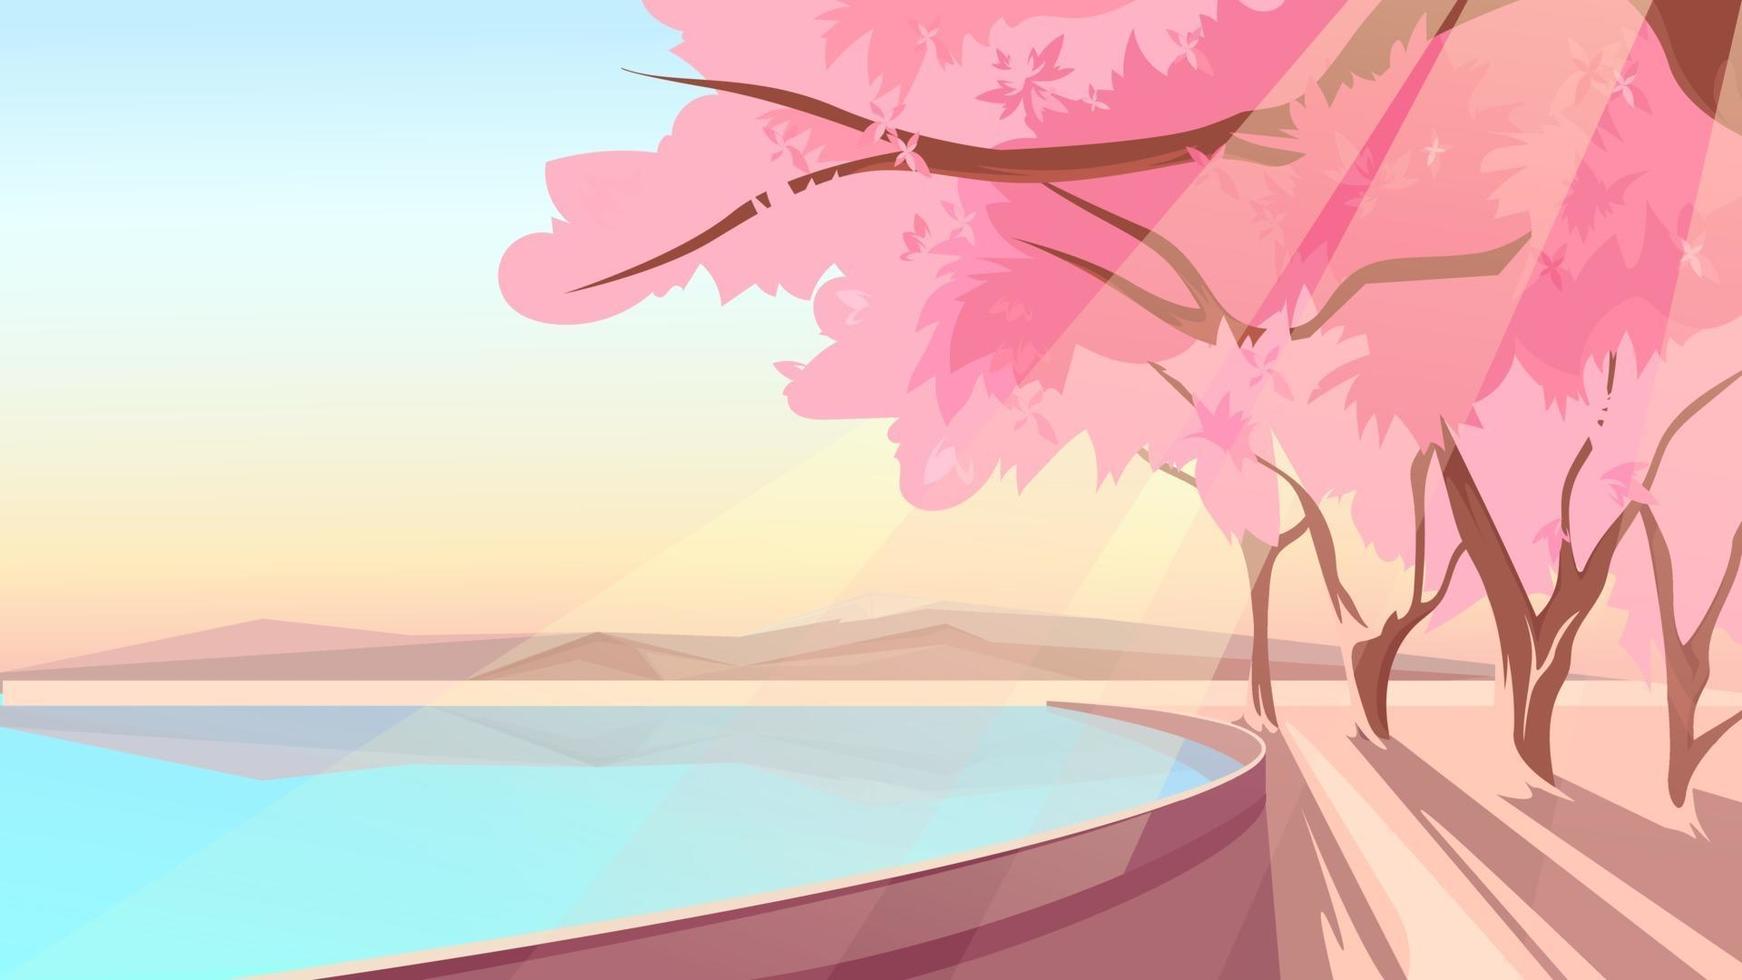 florescendo sakura na margem do lago vetor